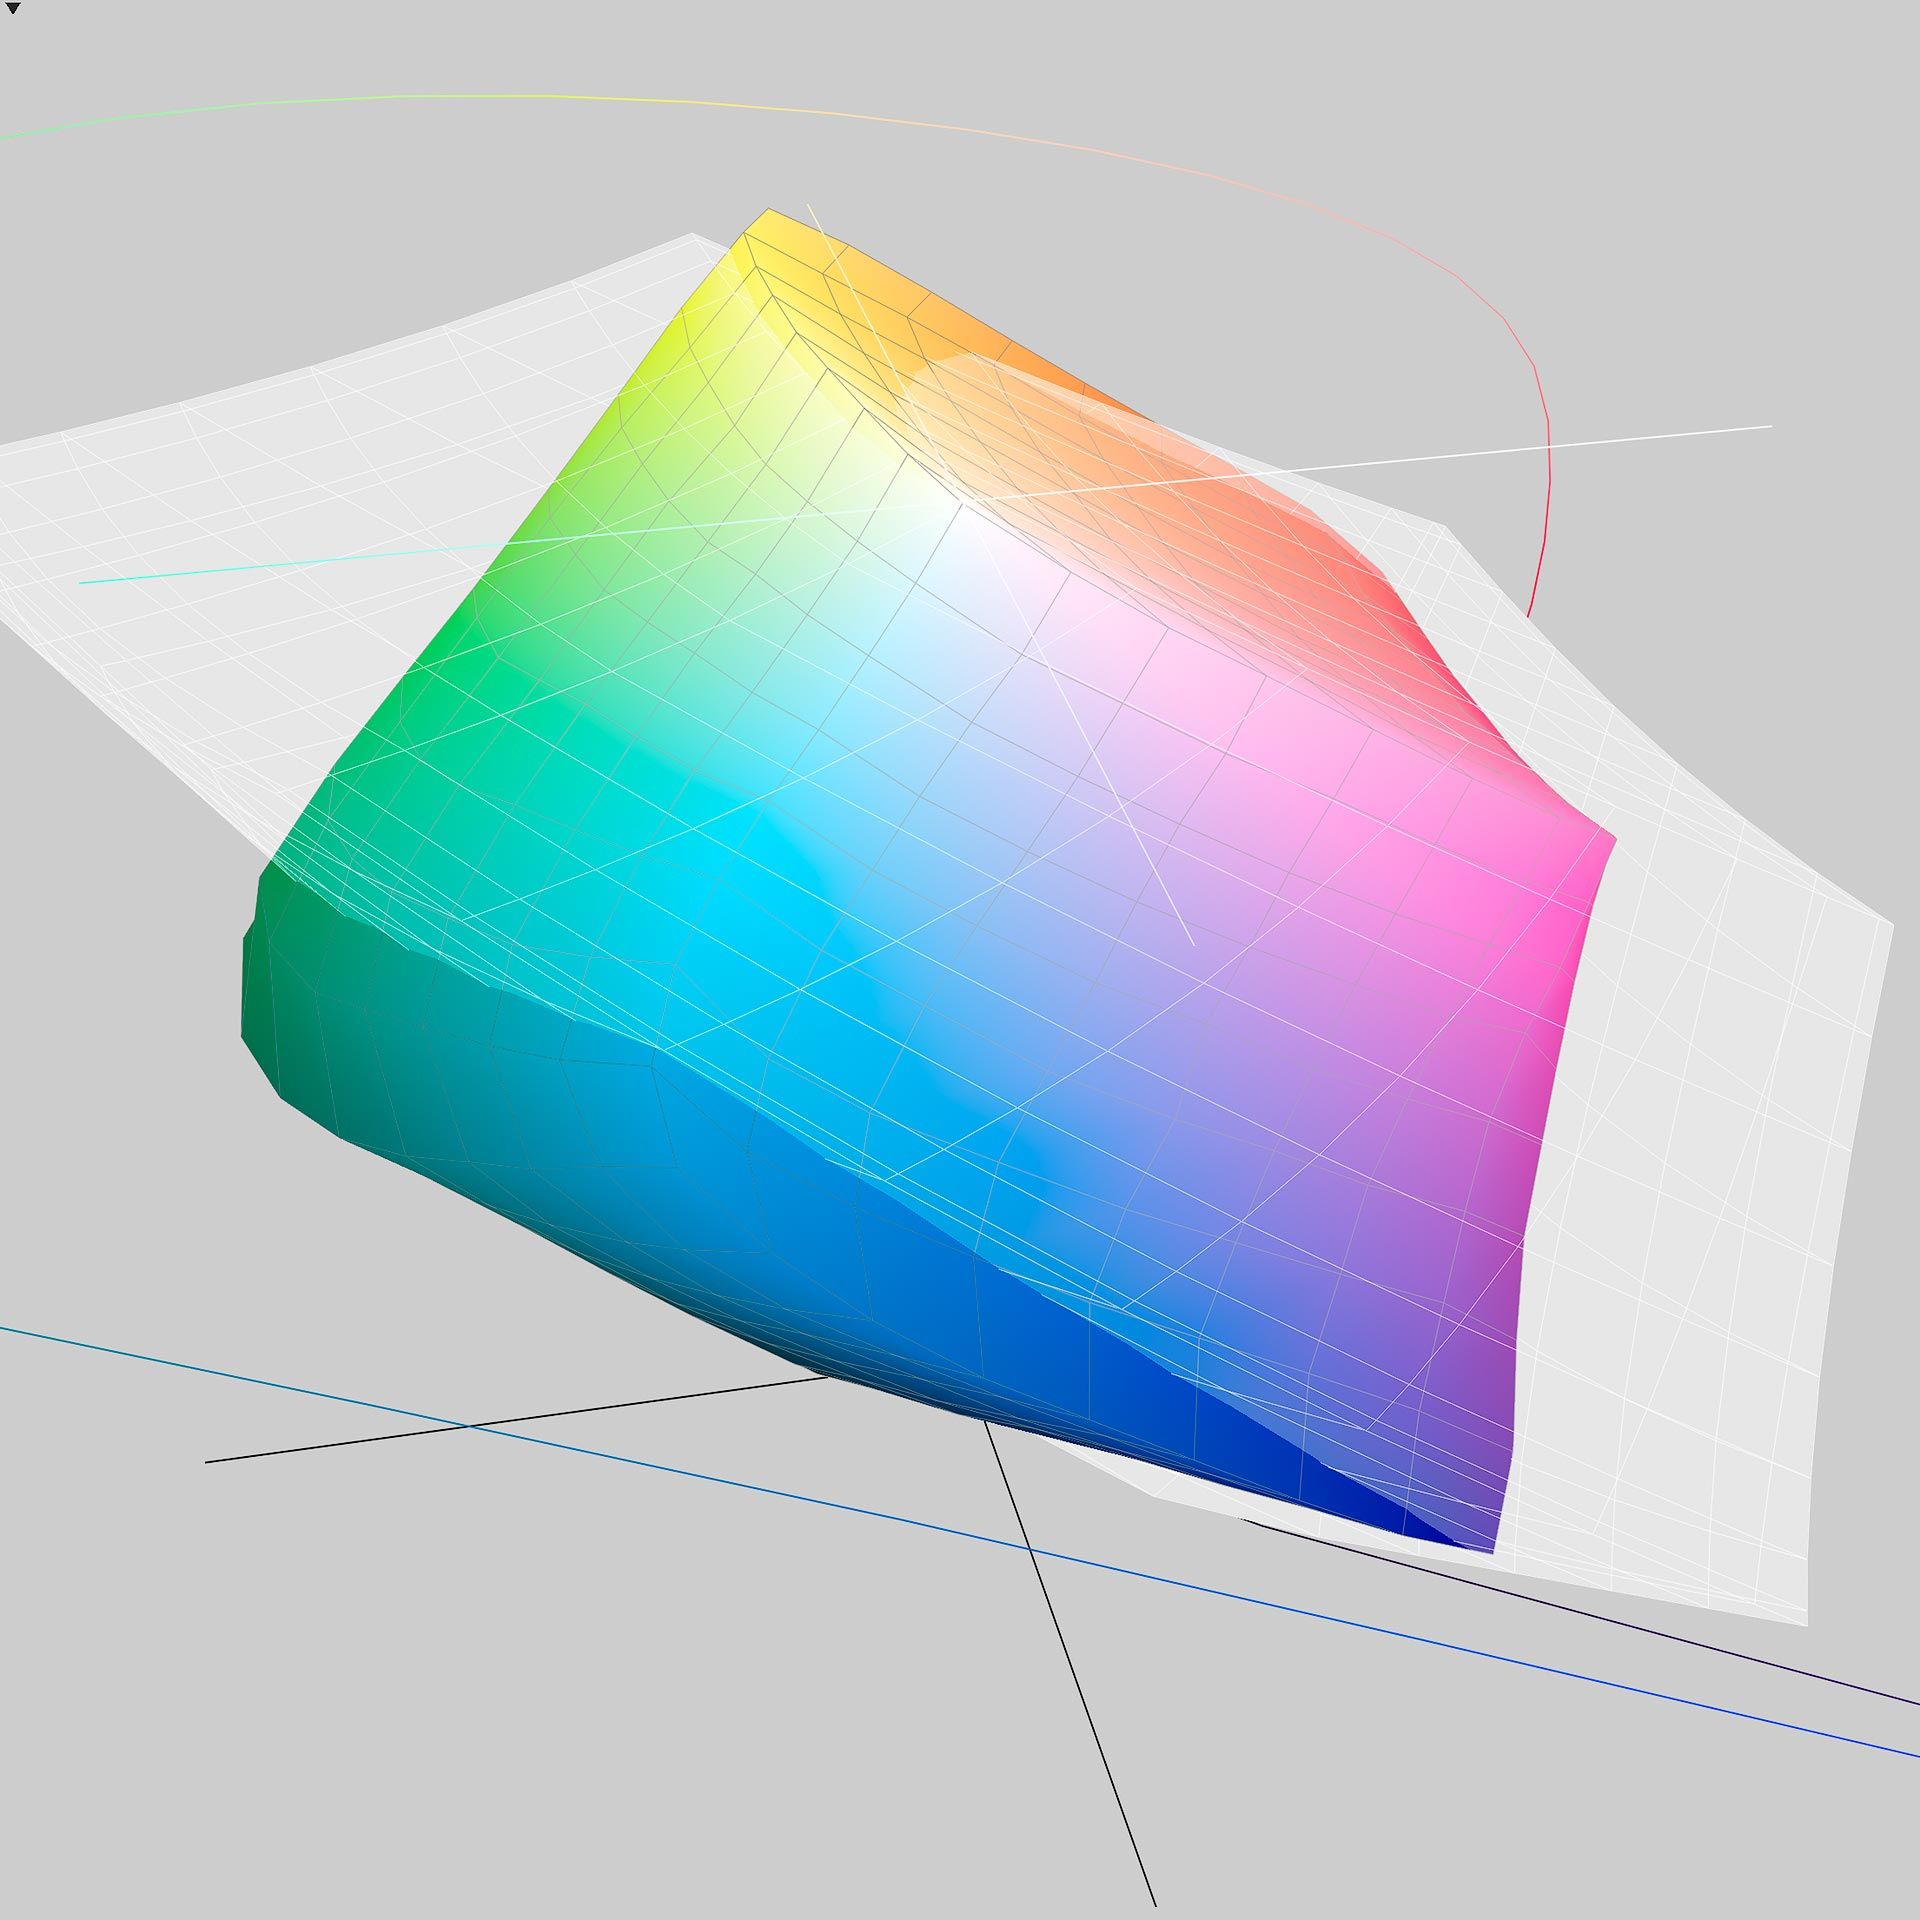 Spectrum shape is Hahnemuhle Photo Rag Baryta, gray shape is Adobe RGB